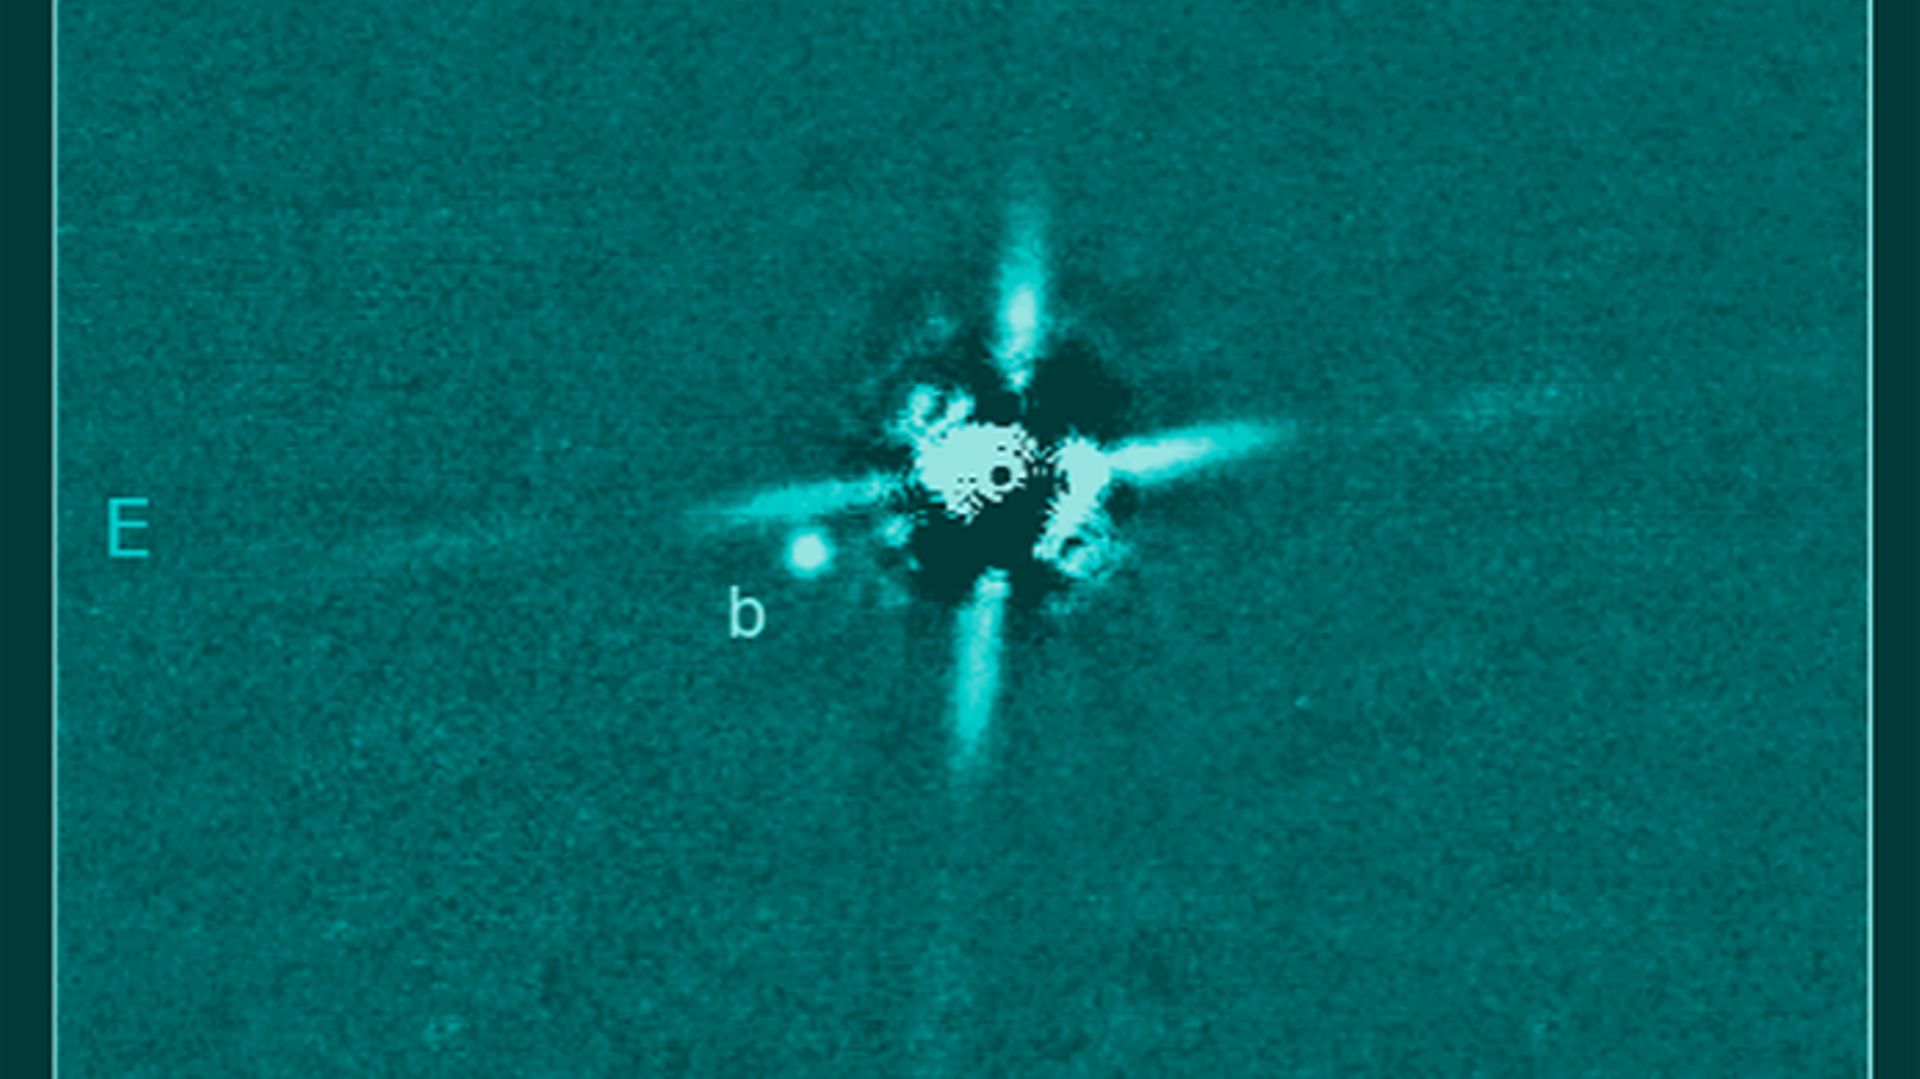 2M0437b depuis le Subaru Telescope par infrarouge